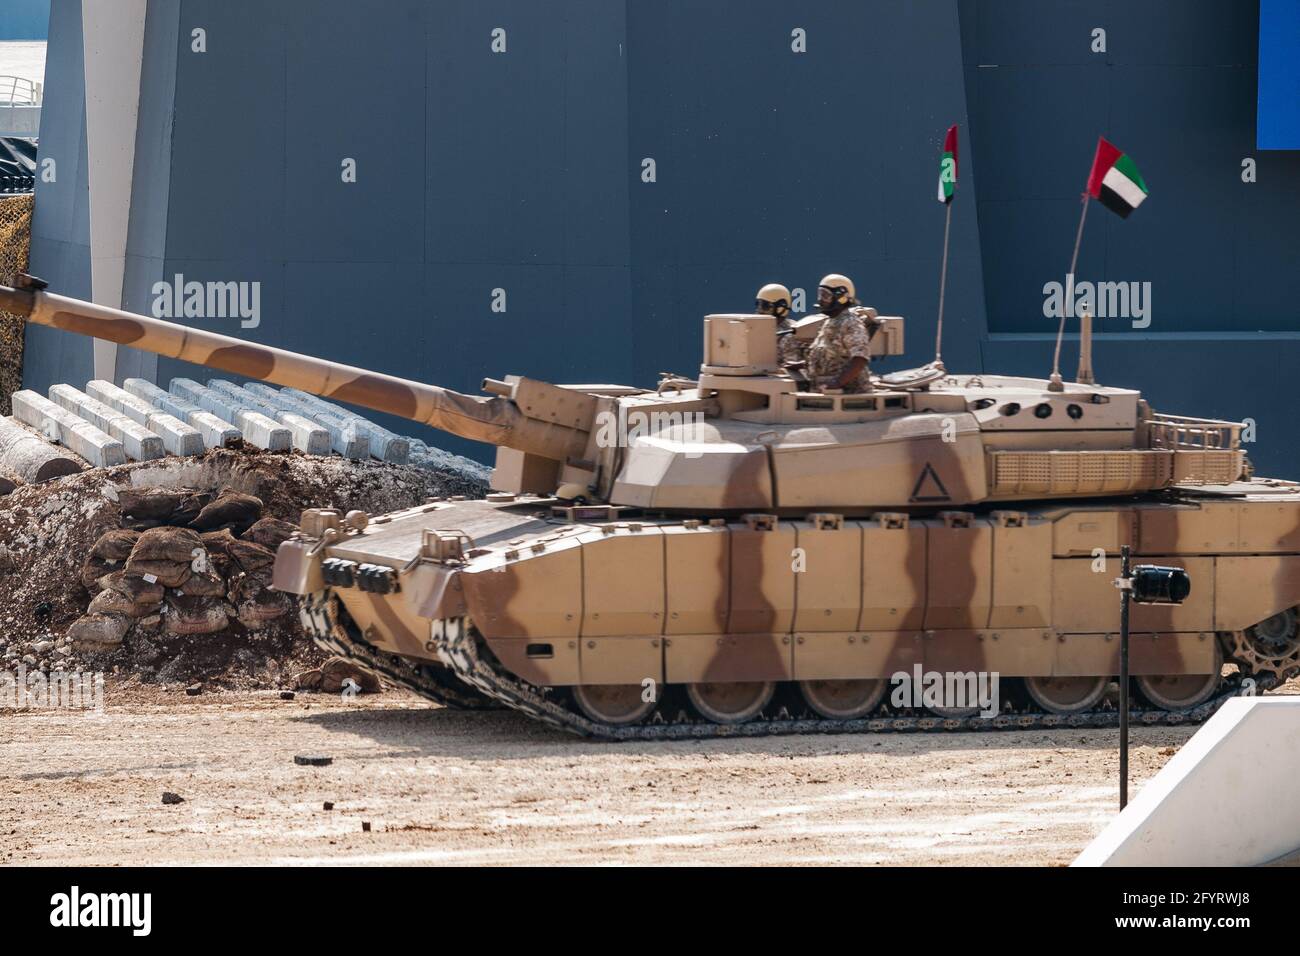 Abu Dhabi, Uae - Feb. 20, 2013: Uae Armed Forces Leclerc Mbt (Main Battle Tank) At Idex 2013 Military Exhibition Stock Photo - Alamy